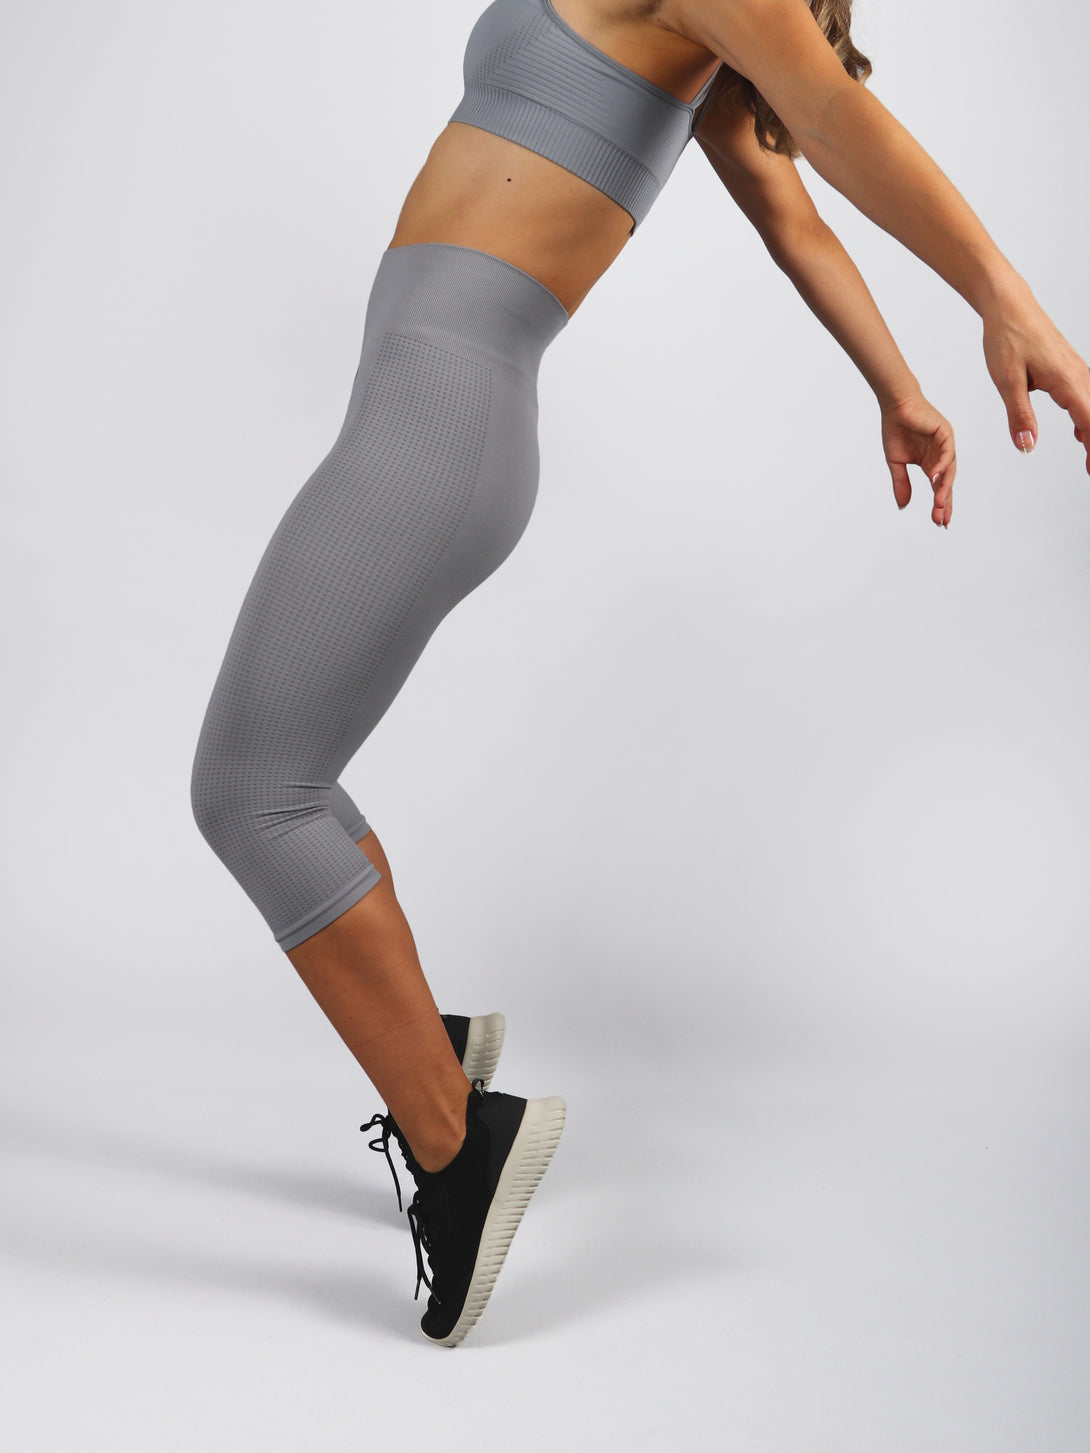 A Woman Wearing Dark Grey Color Seamless Capri Legging